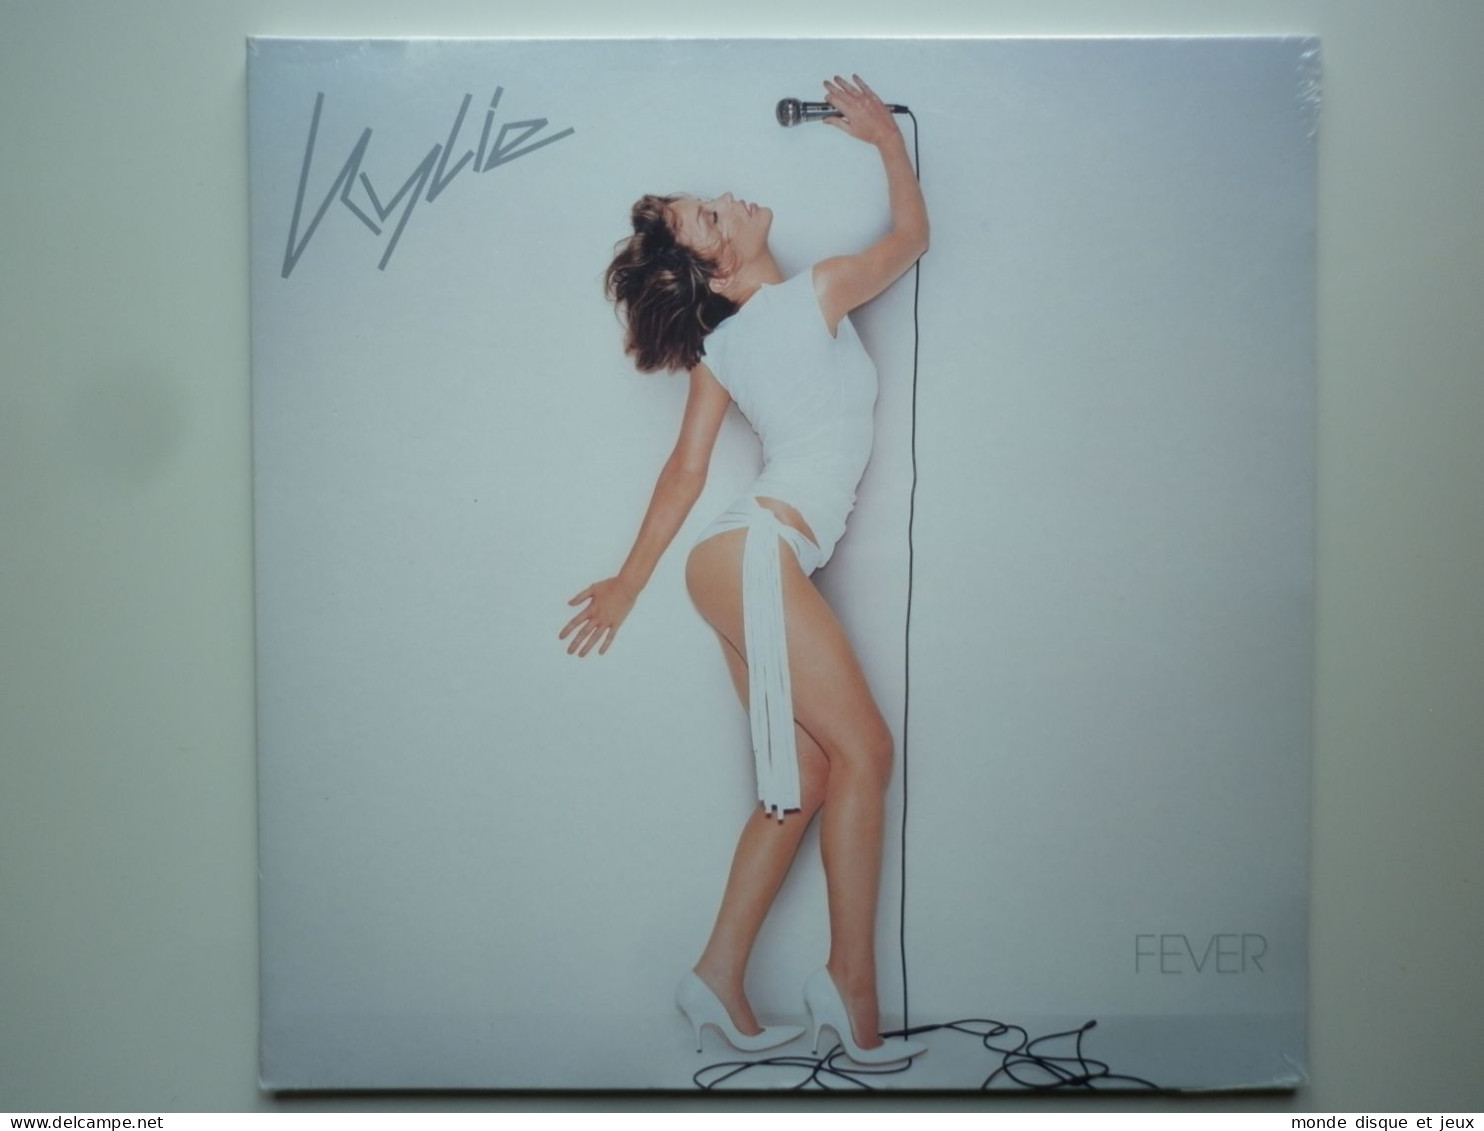 Kylie Minogue Album 33Tours Vinyle Fever - Andere - Franstalig